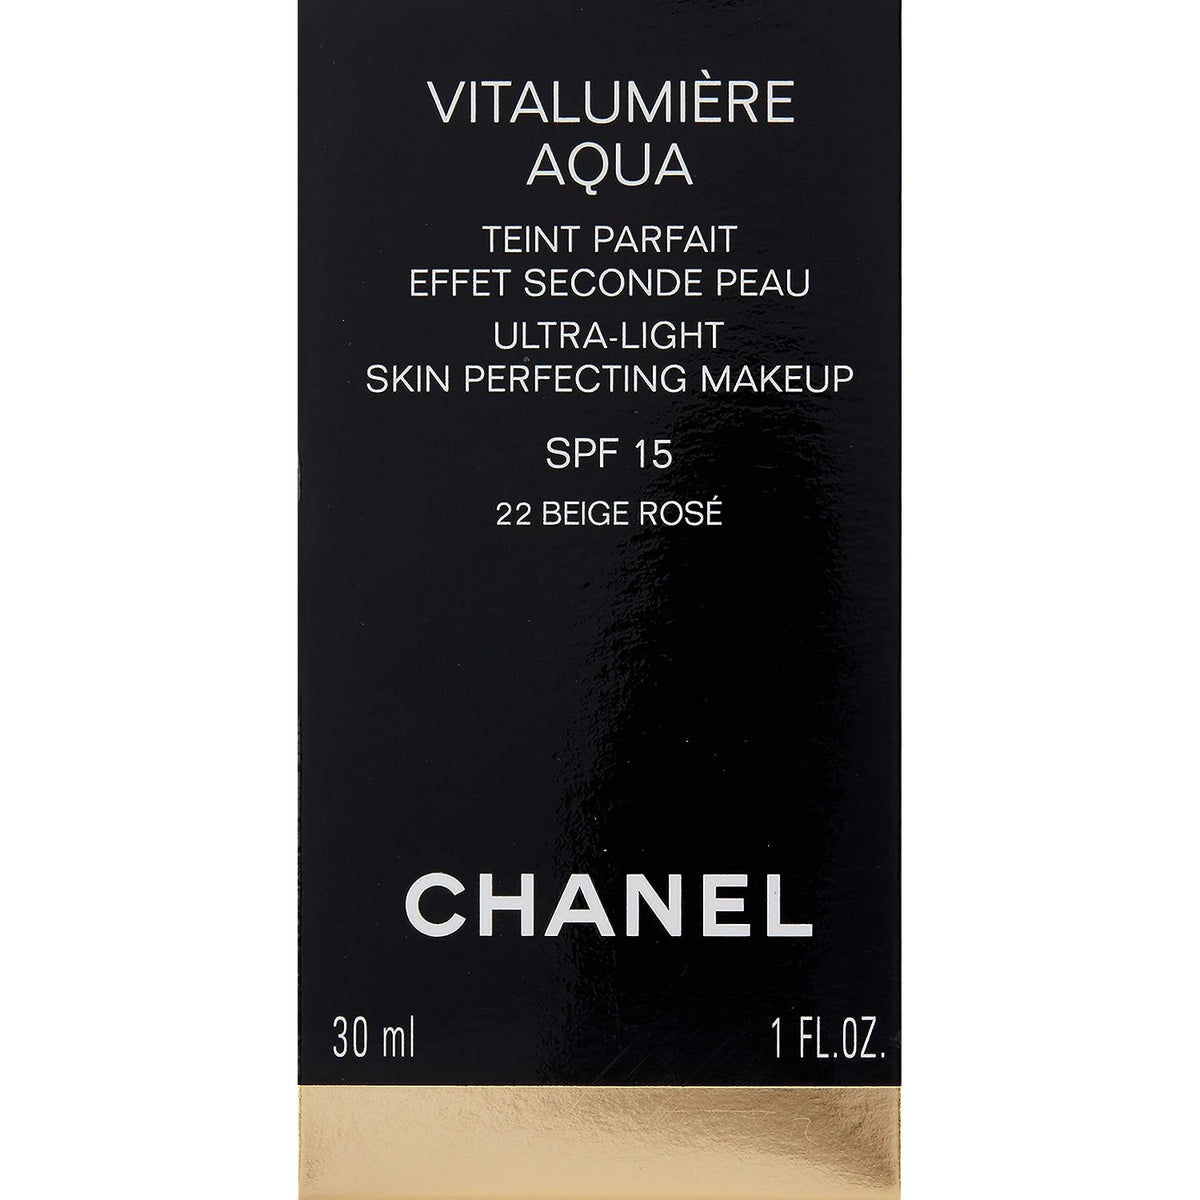 Chanel Vitalumiere Aqua Ultra Light Skin Perfecting Makeup Review